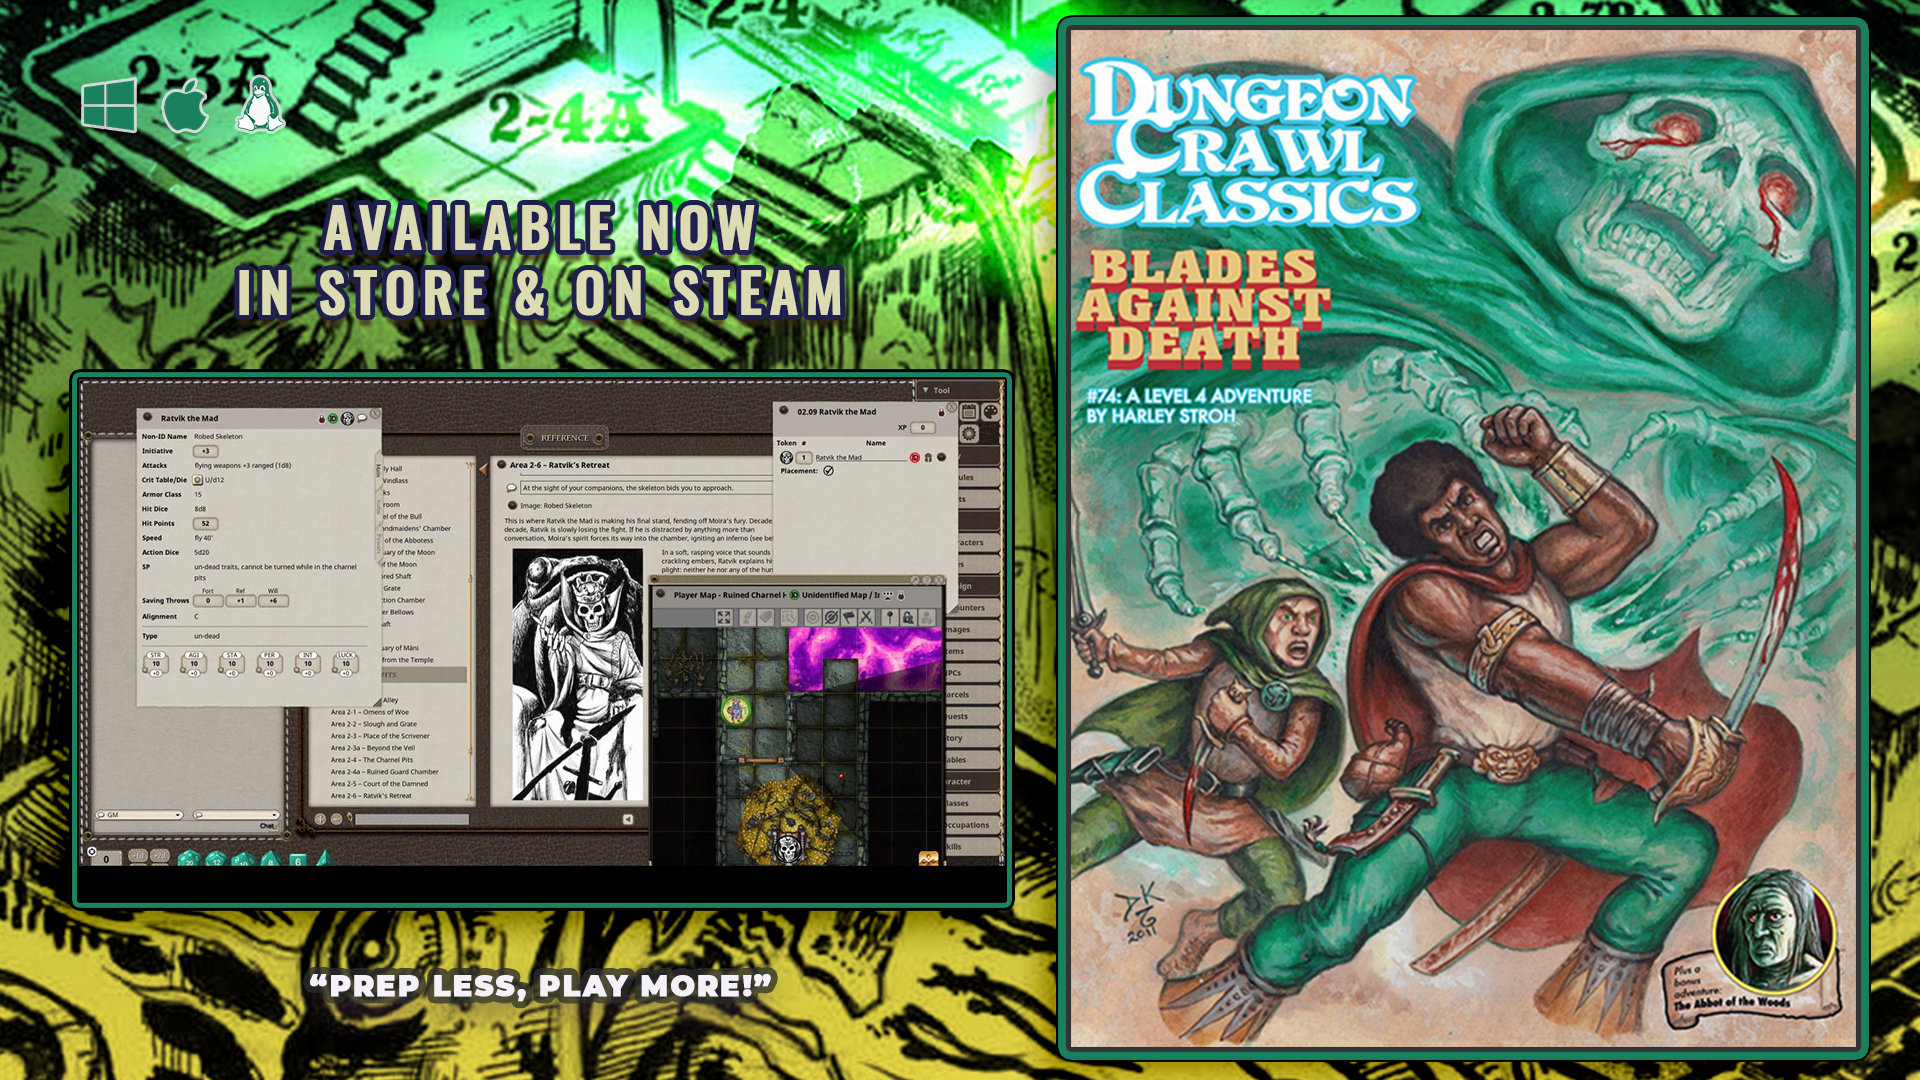 Dungeon Crawl Classics #74 Blades Against Death(GGGMG5075).jpg